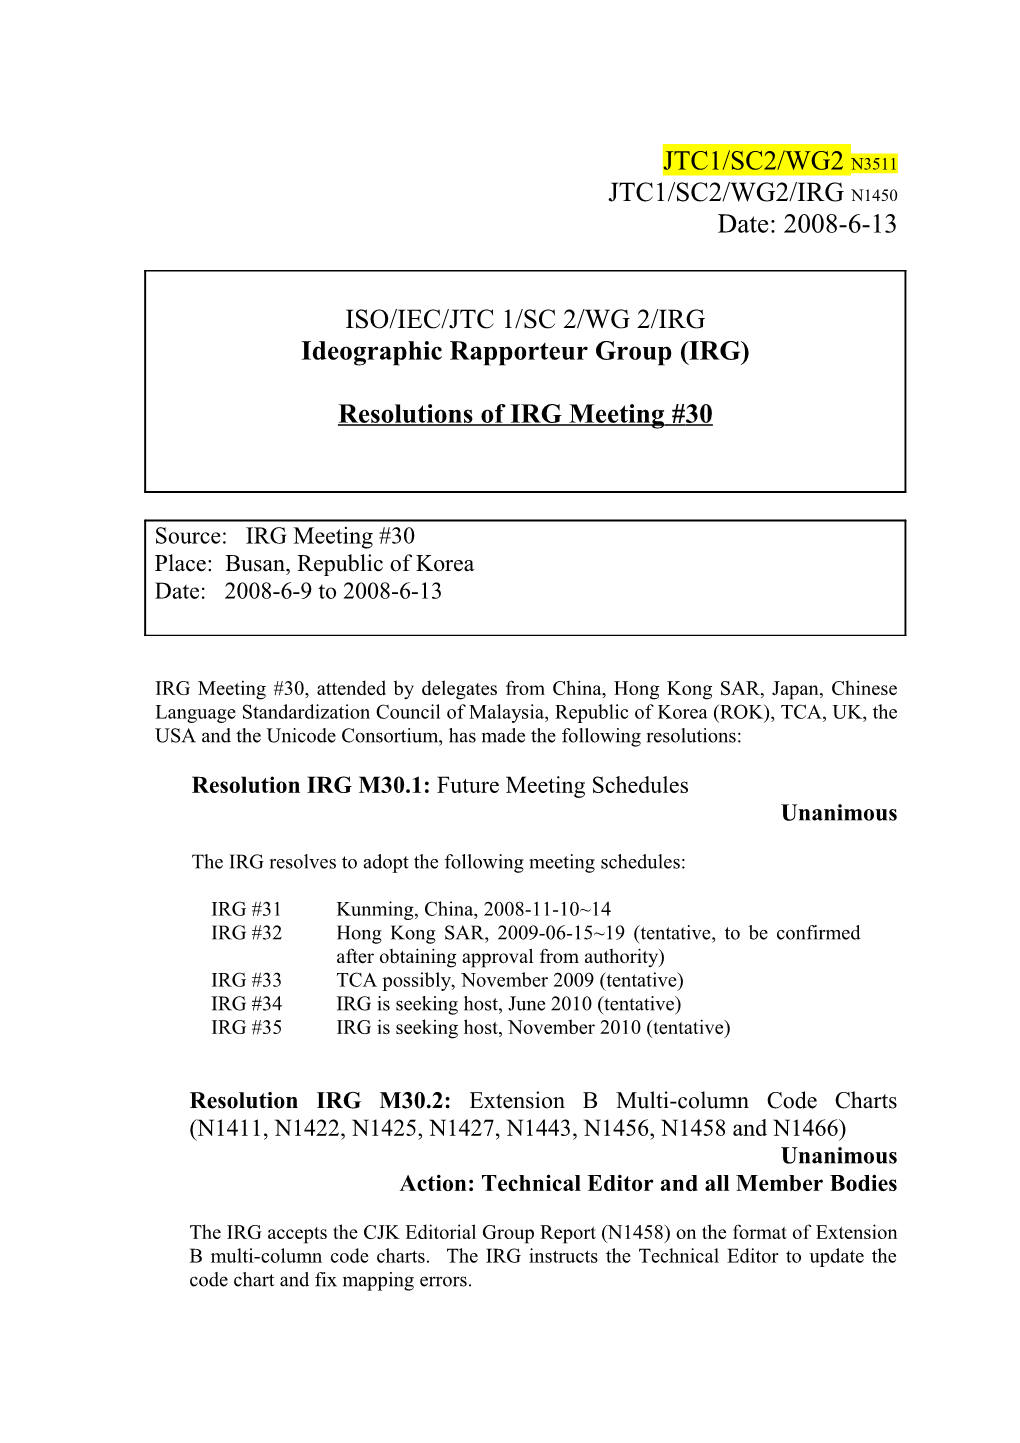 Resolution IRG M30.1: Future Meeting Schedules